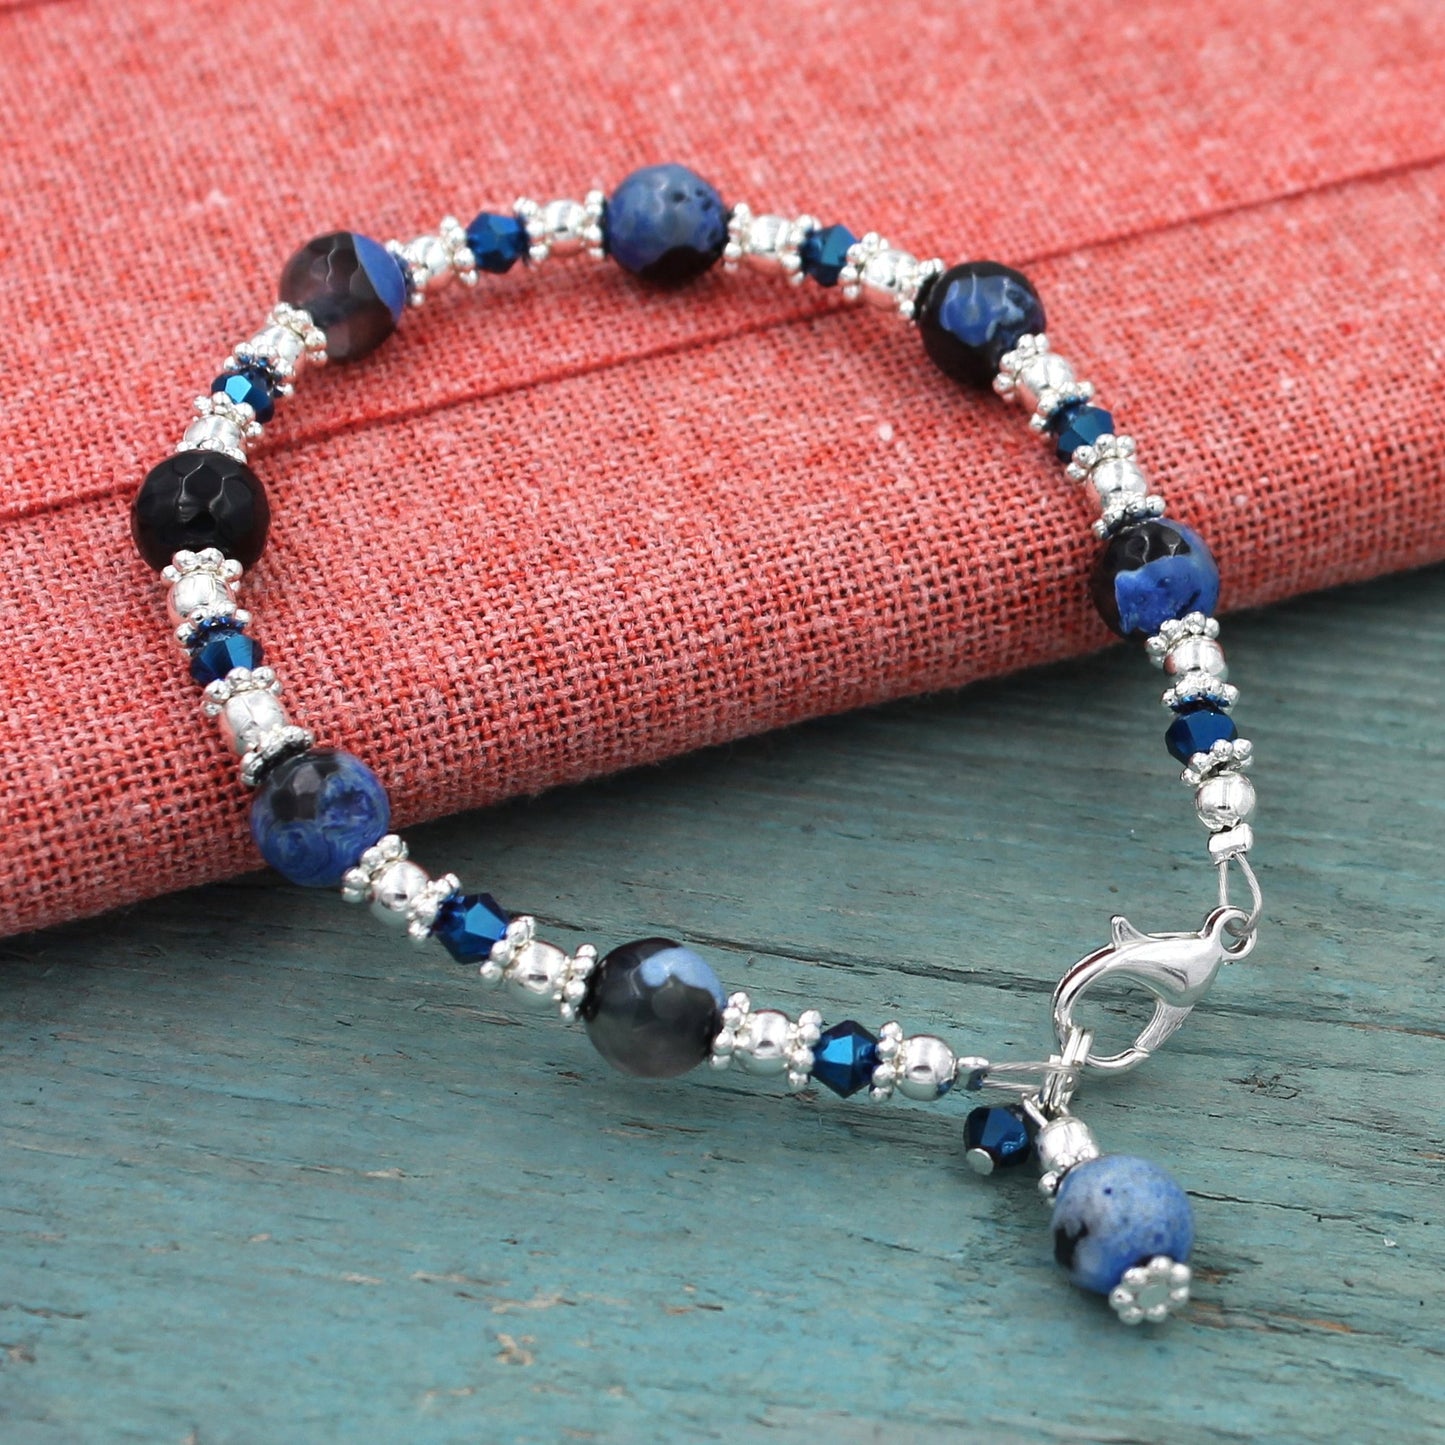 BESHEEK Sivlertone and Crystal Blue and Black Calsilica Bali Style Bracelet| Handmade Hypoallergenic Boho Beach Gala Wedding Style Jewelry